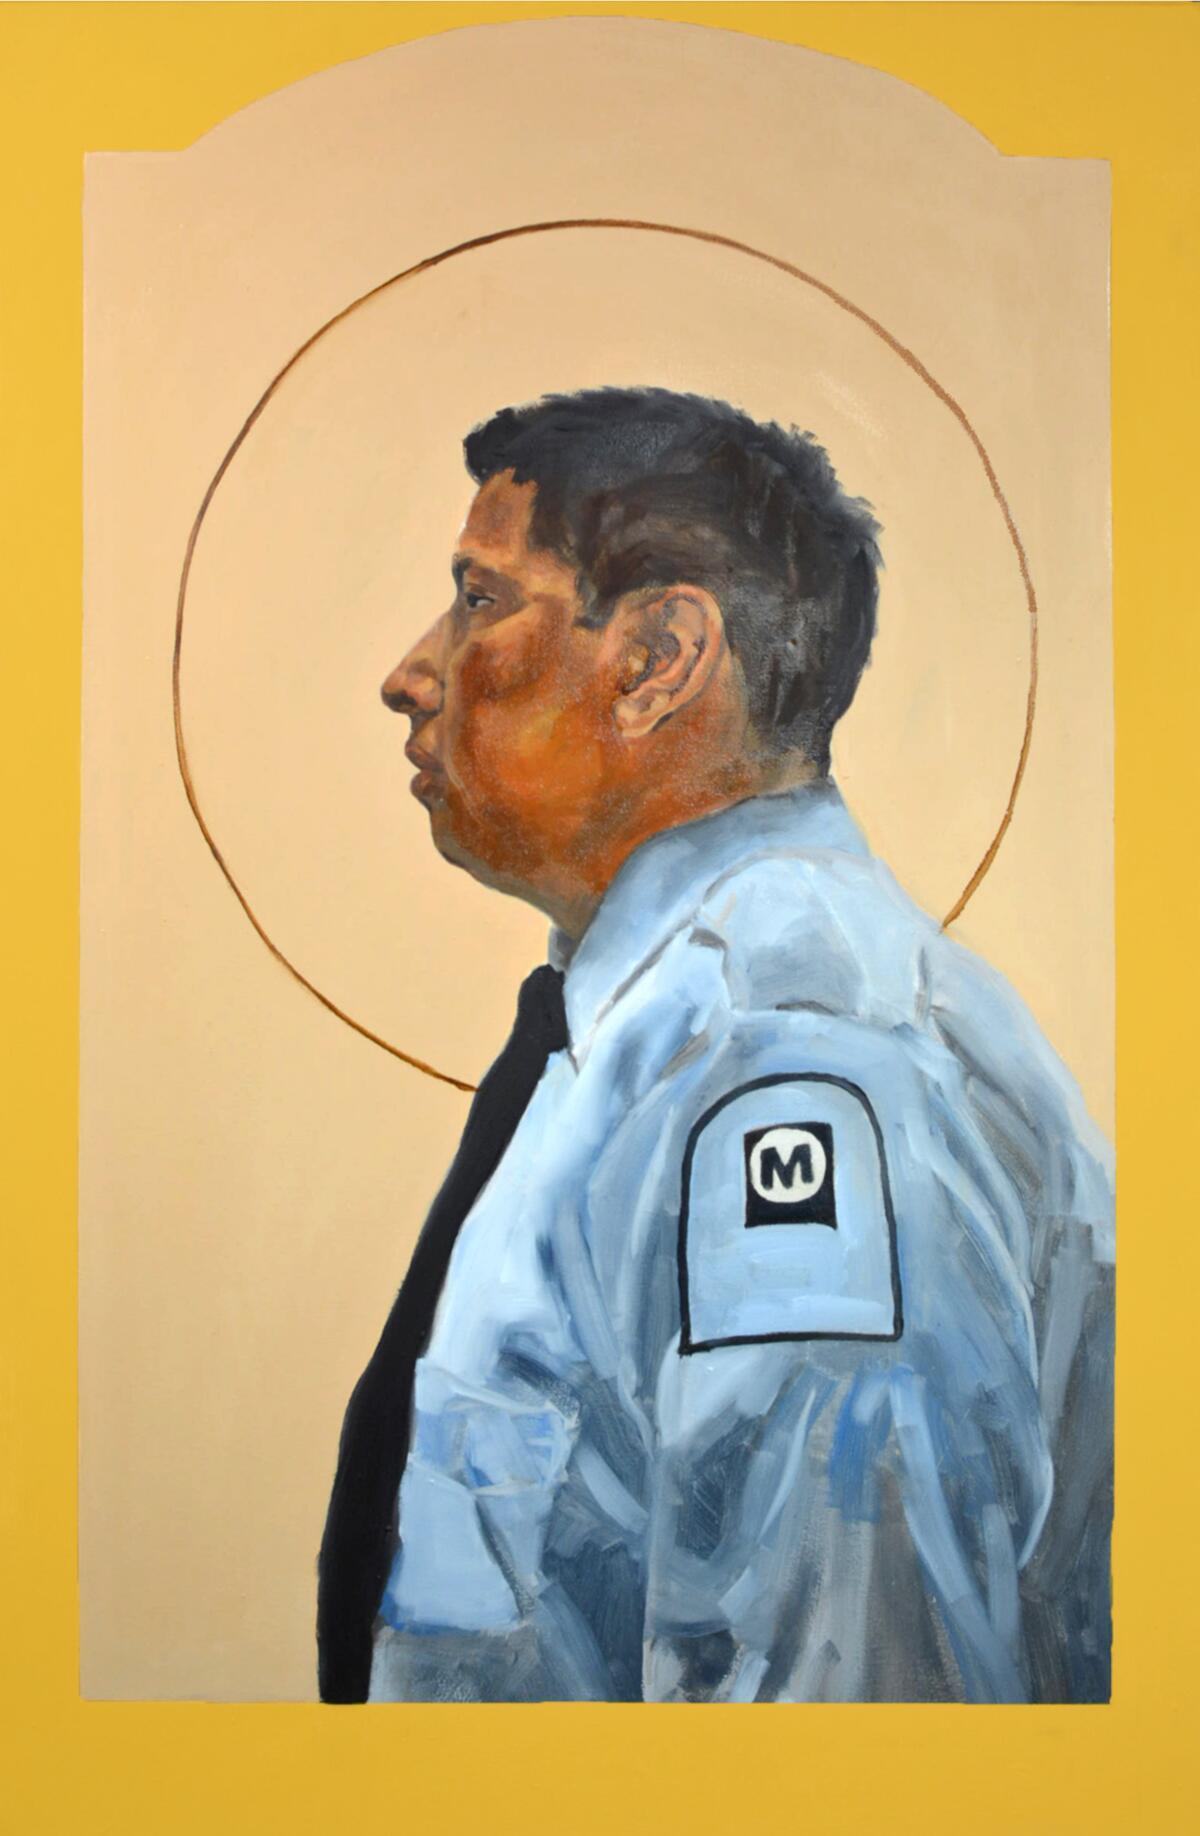 Palomares' painting "René" is a side-view portrait of an L.A. bus driver.